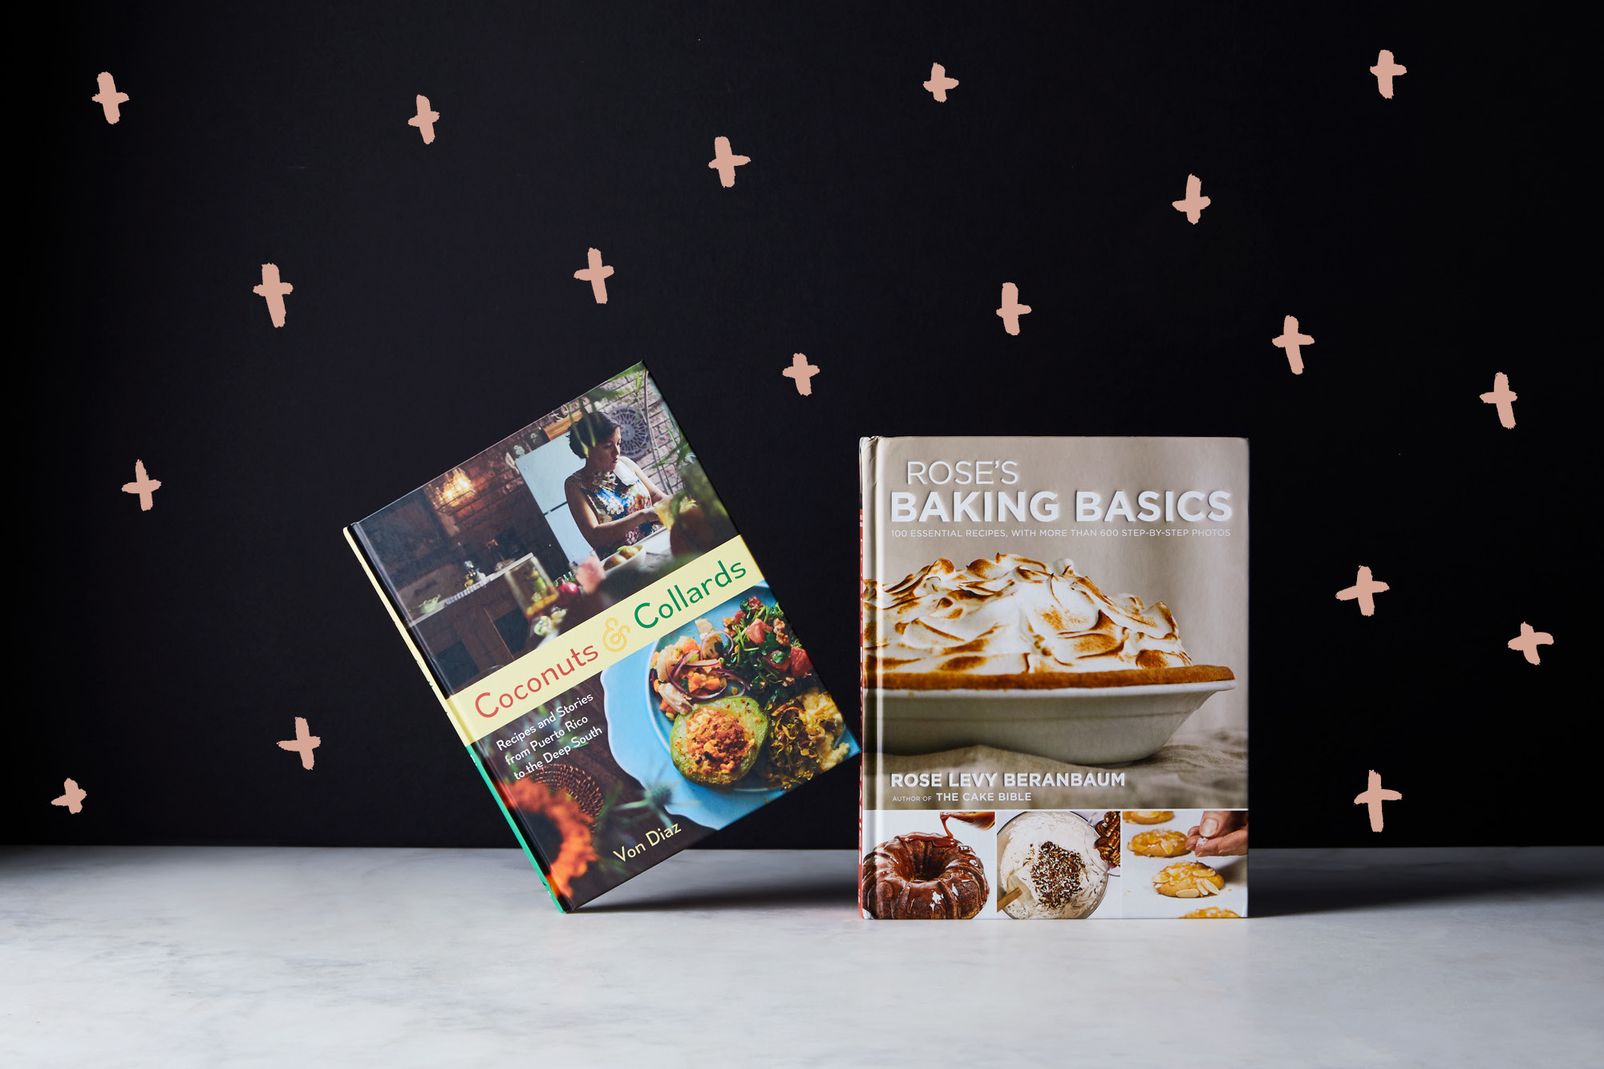 Coconuts & Collards vs. Rose's Baking Basics